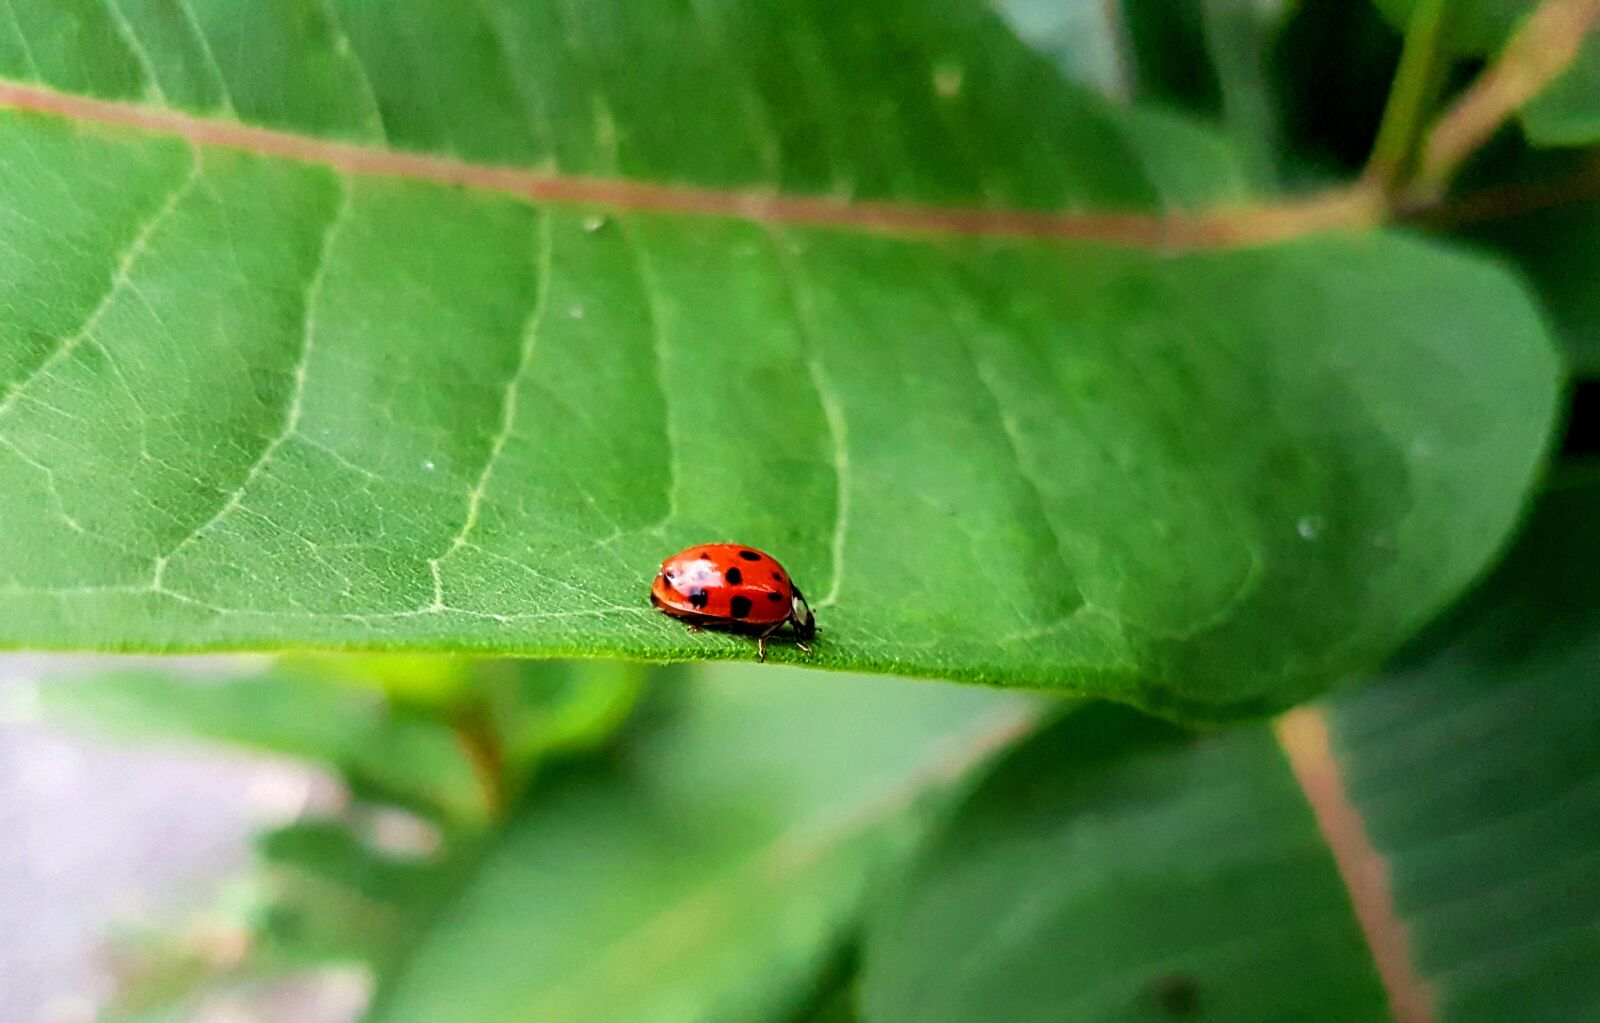 Samsung Galaxy S7 sample photo. Ladybug, insect, beetle photography